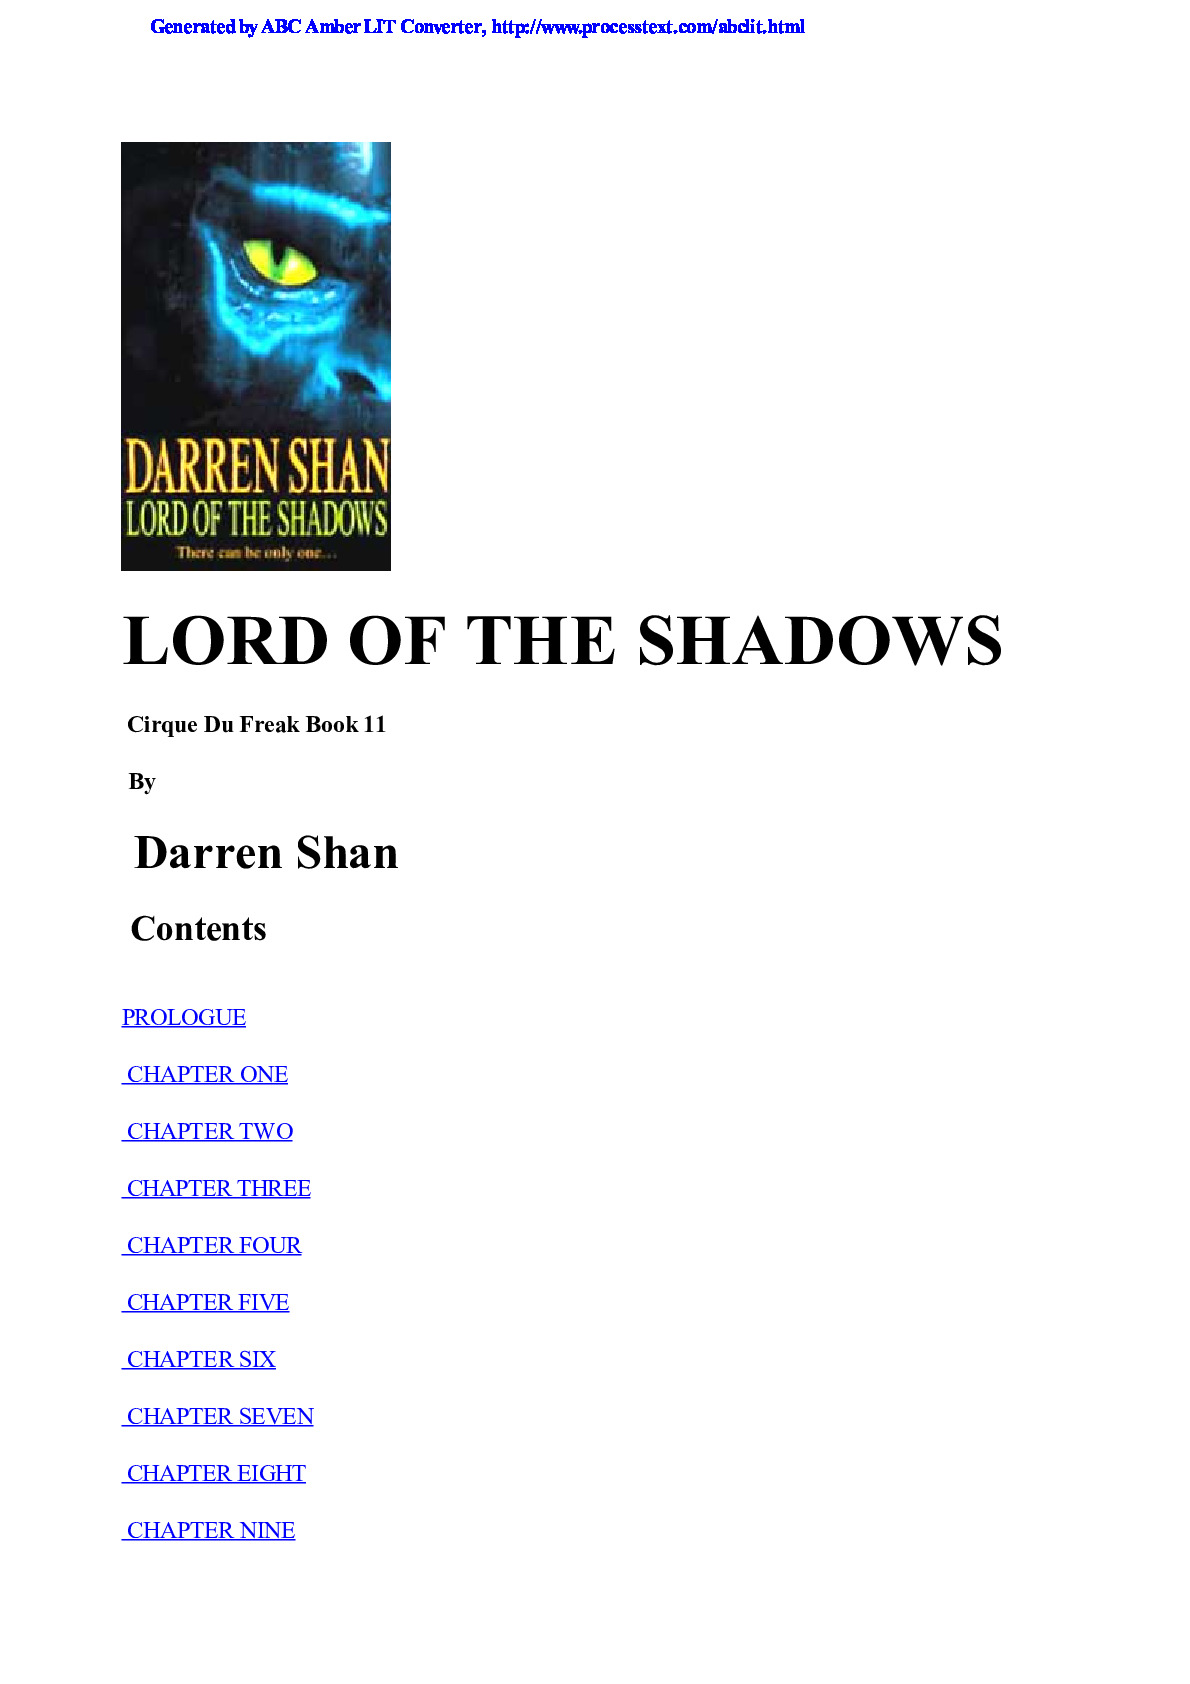 Shan, Darren – Cirque Du Freak 11 – Lord of the Shadows